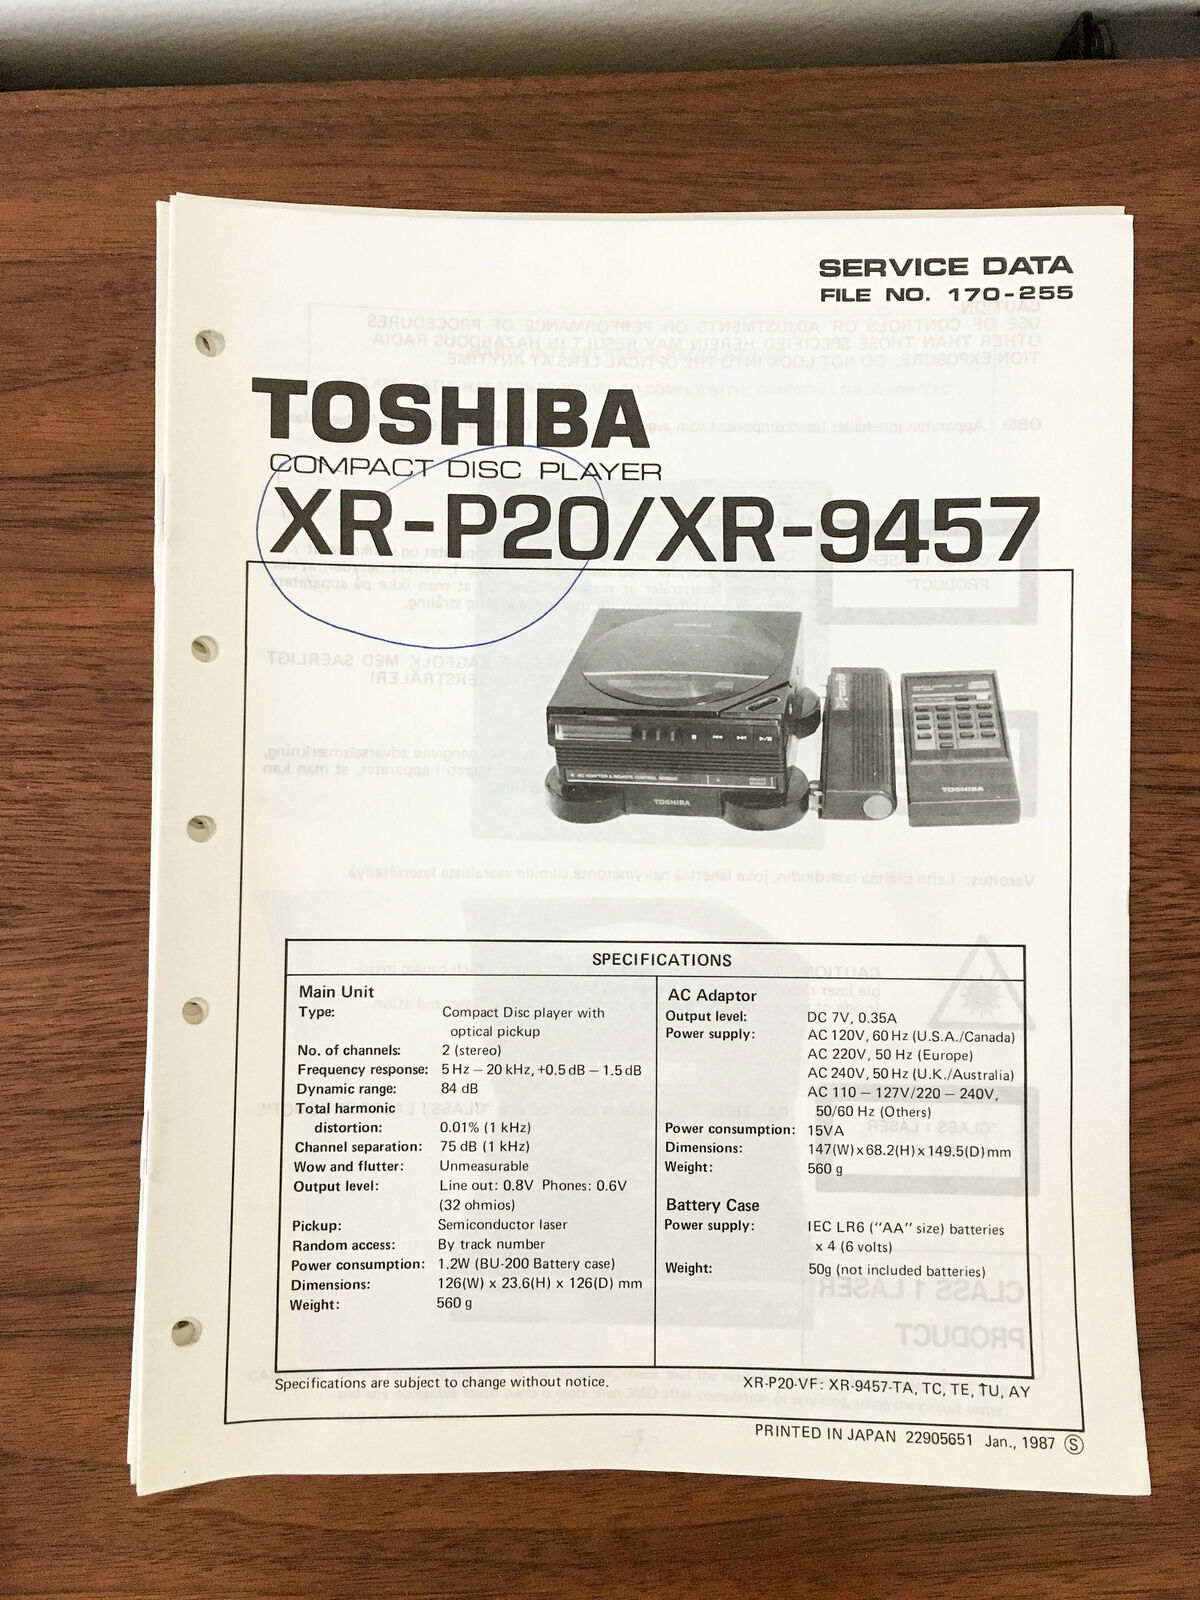 Used Toshiba XR-P20 CD players for Sale | HifiShark.com